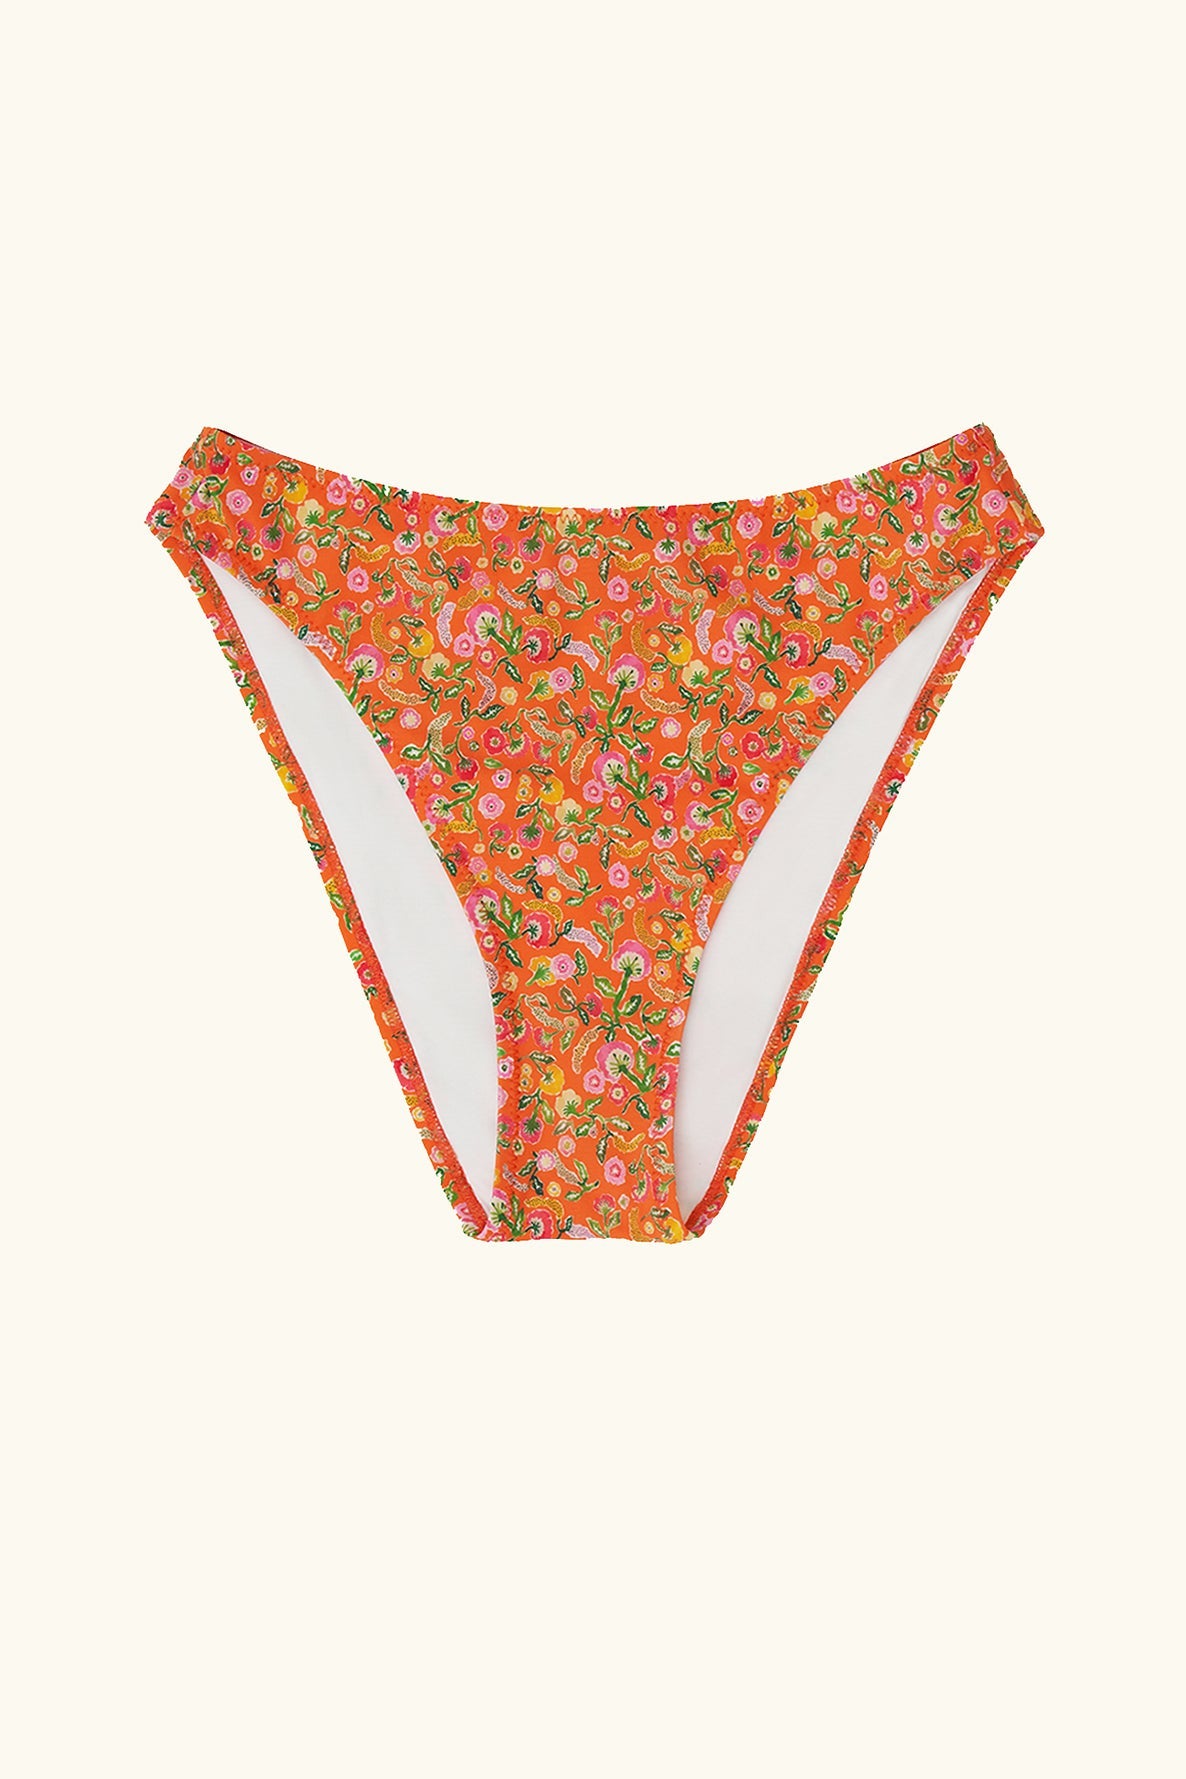 sustainable swimwear high rise french cut bikini bottom orange floral print